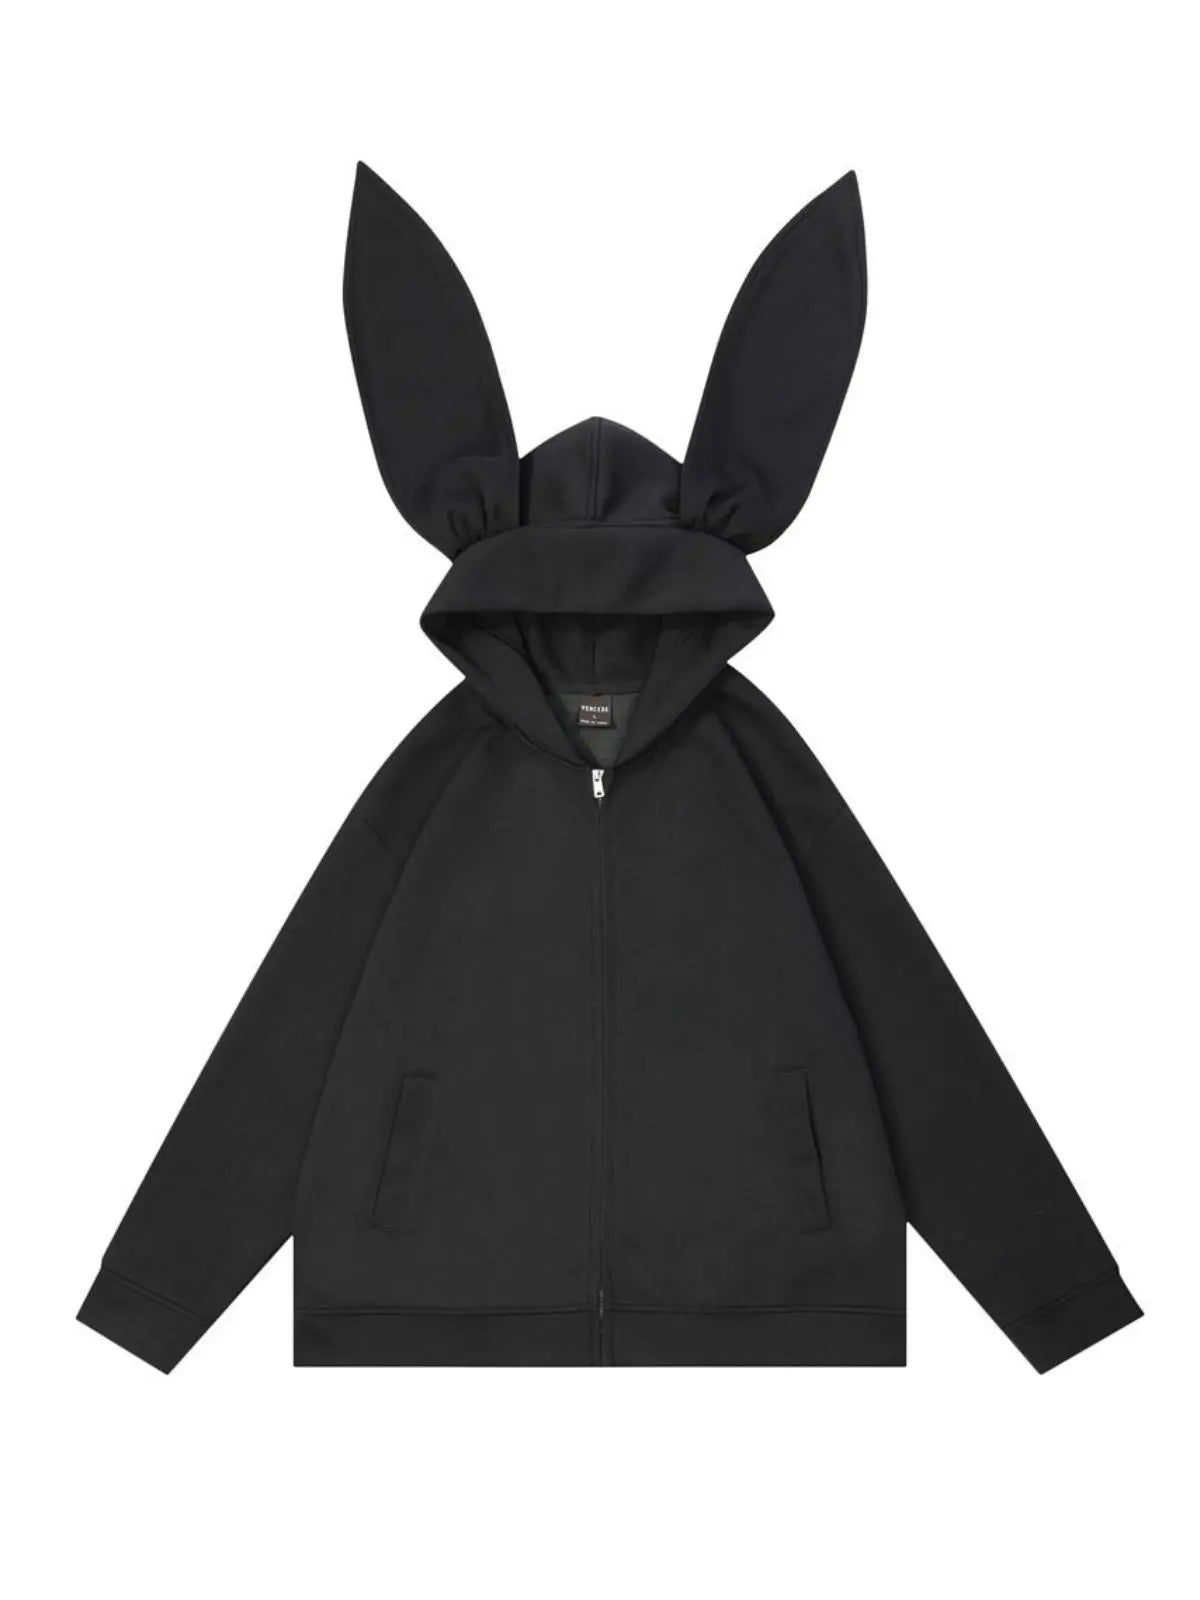 'Big Ears' Street Fashion Simple Hooded Bunny Sweatshirt AlielNosirrah